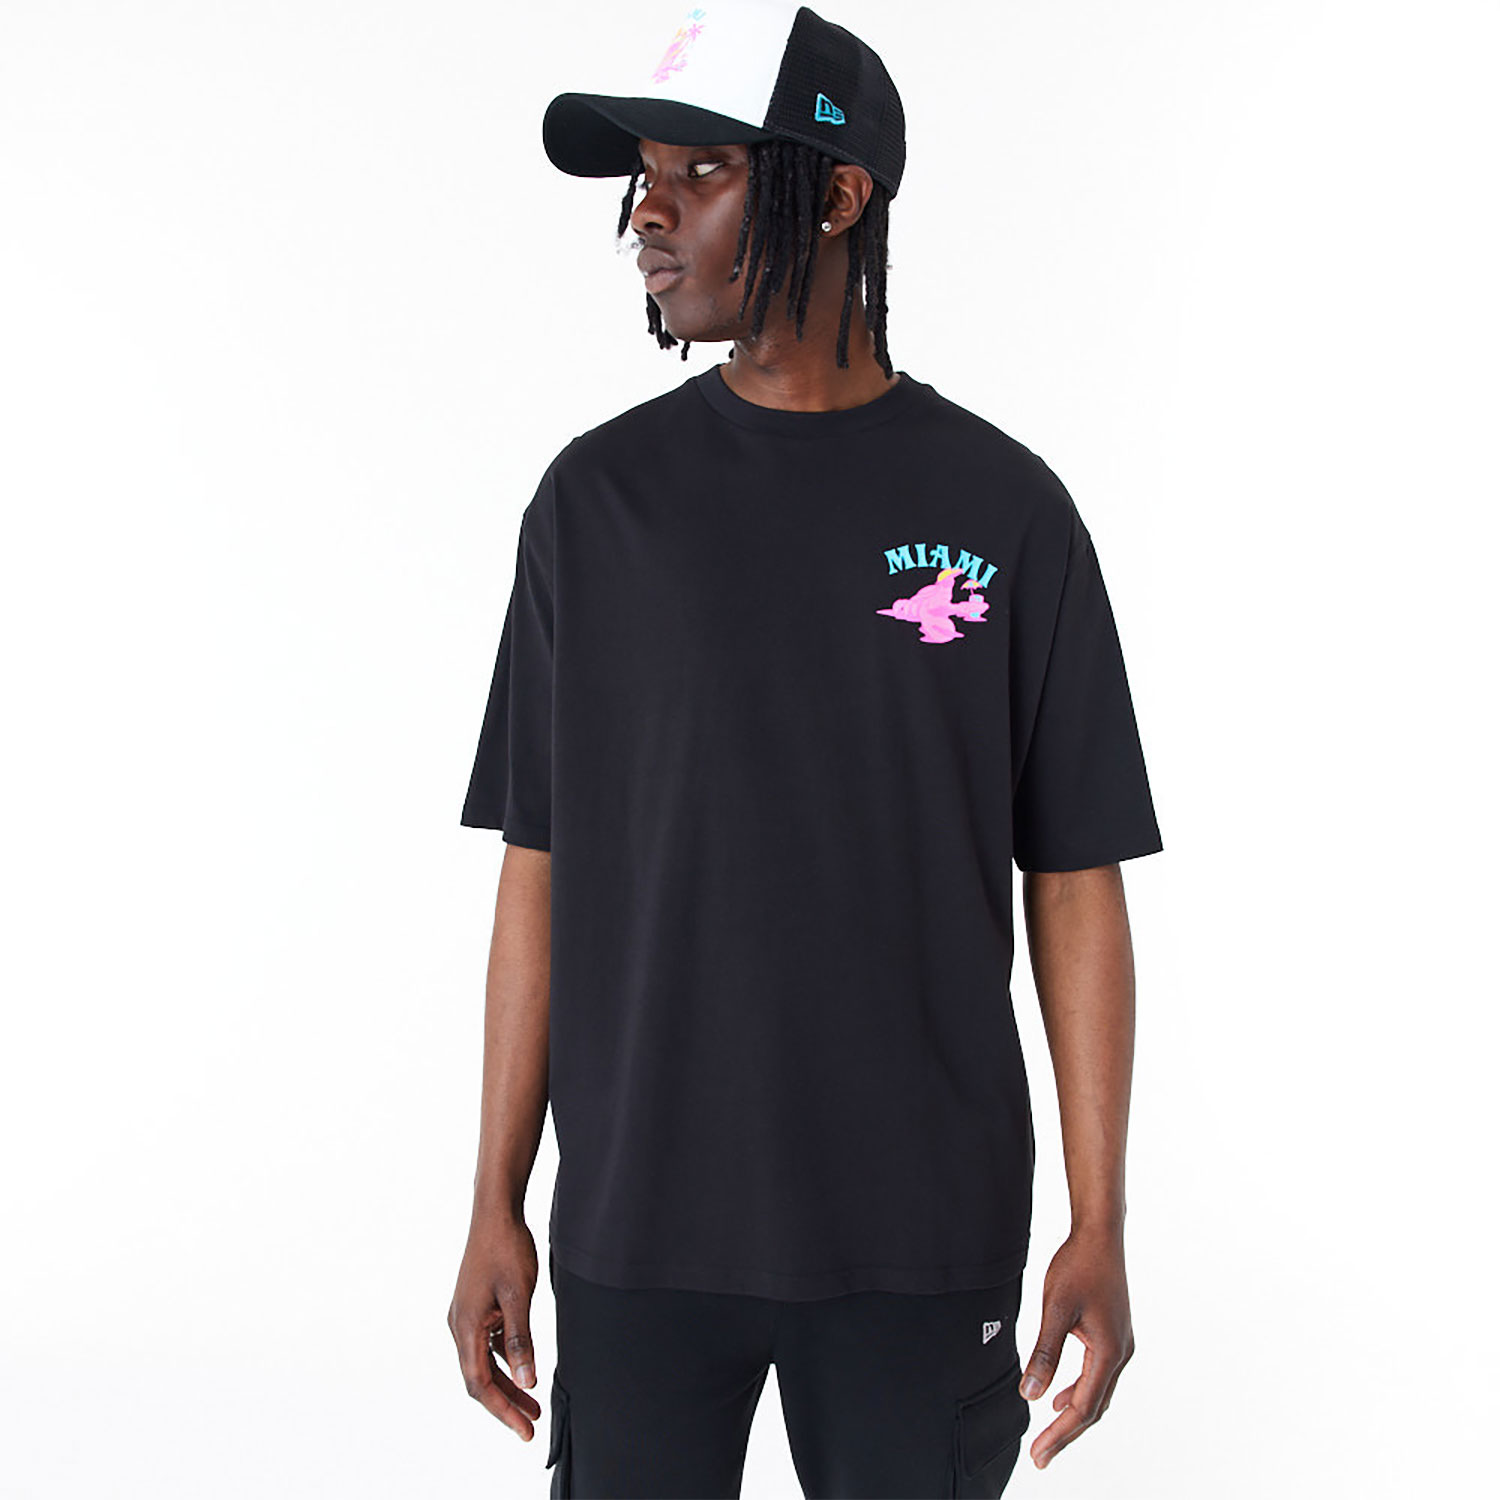 New Era Miami City Graphic Black T-Shirt